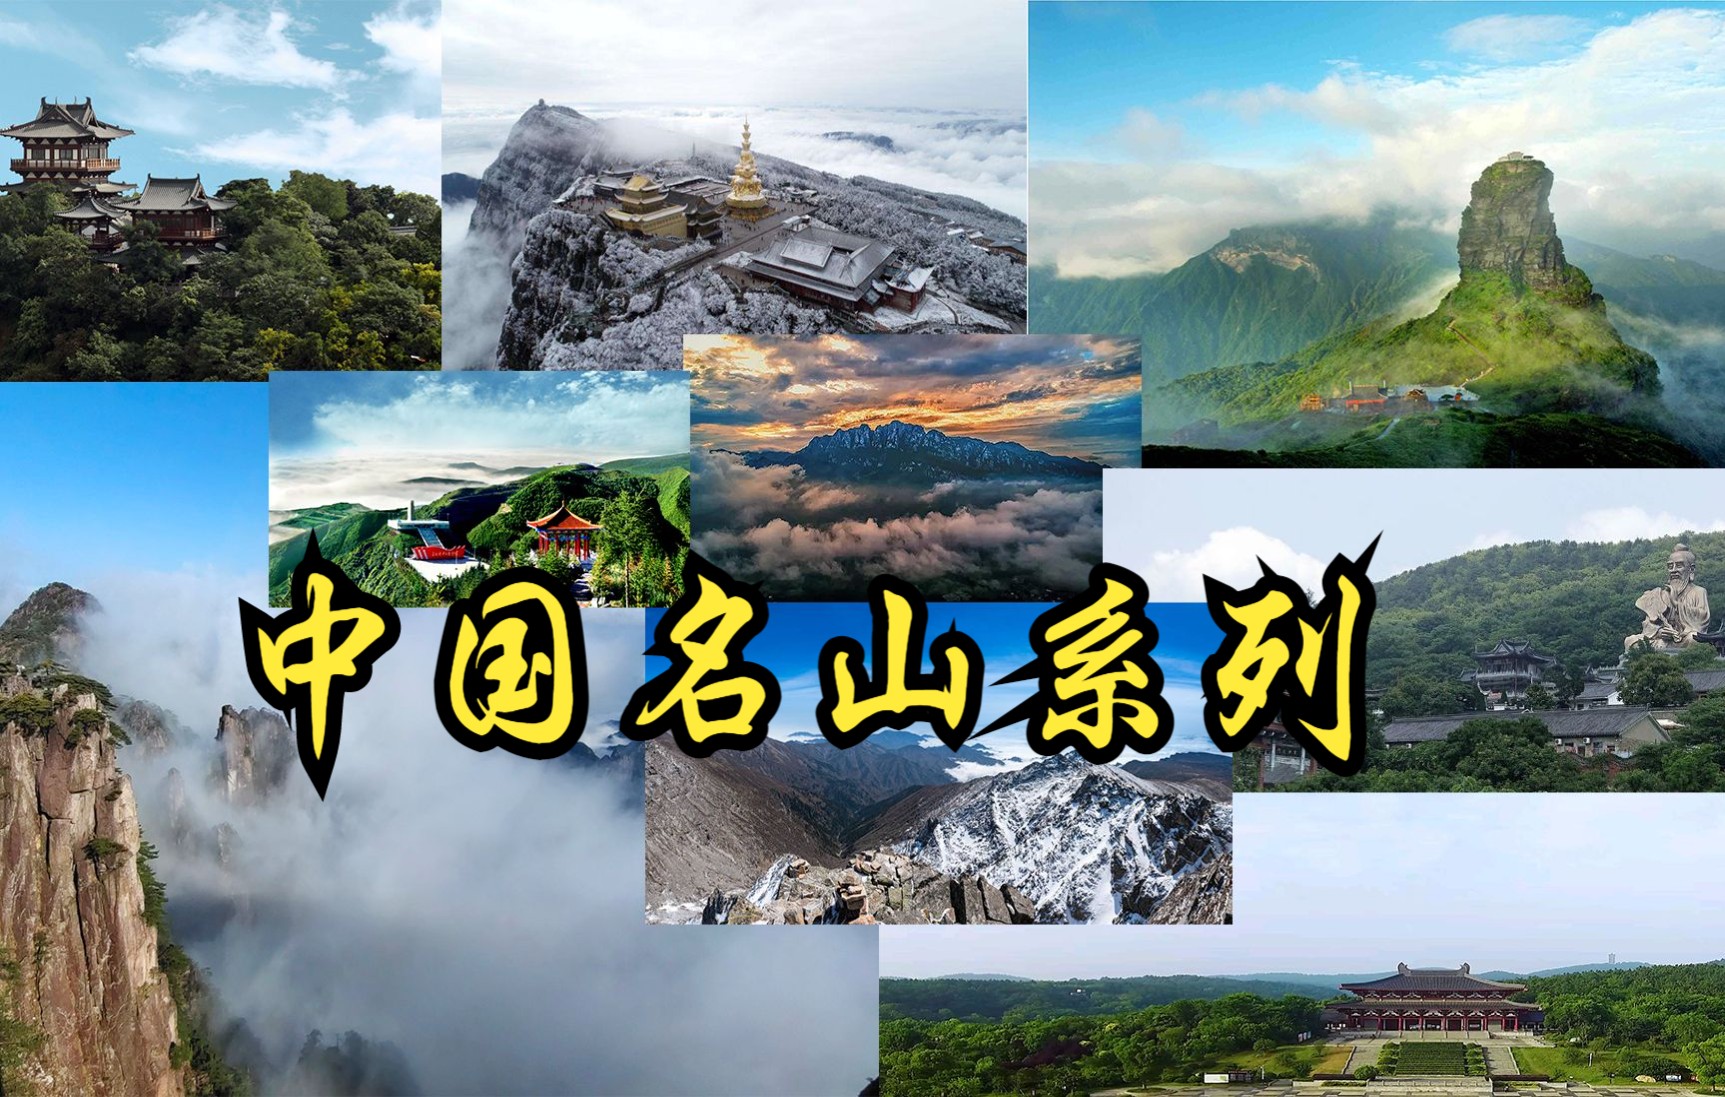 【中国】【纪录片】中国名山系列纪录片 Documentary series of famous mountains in China